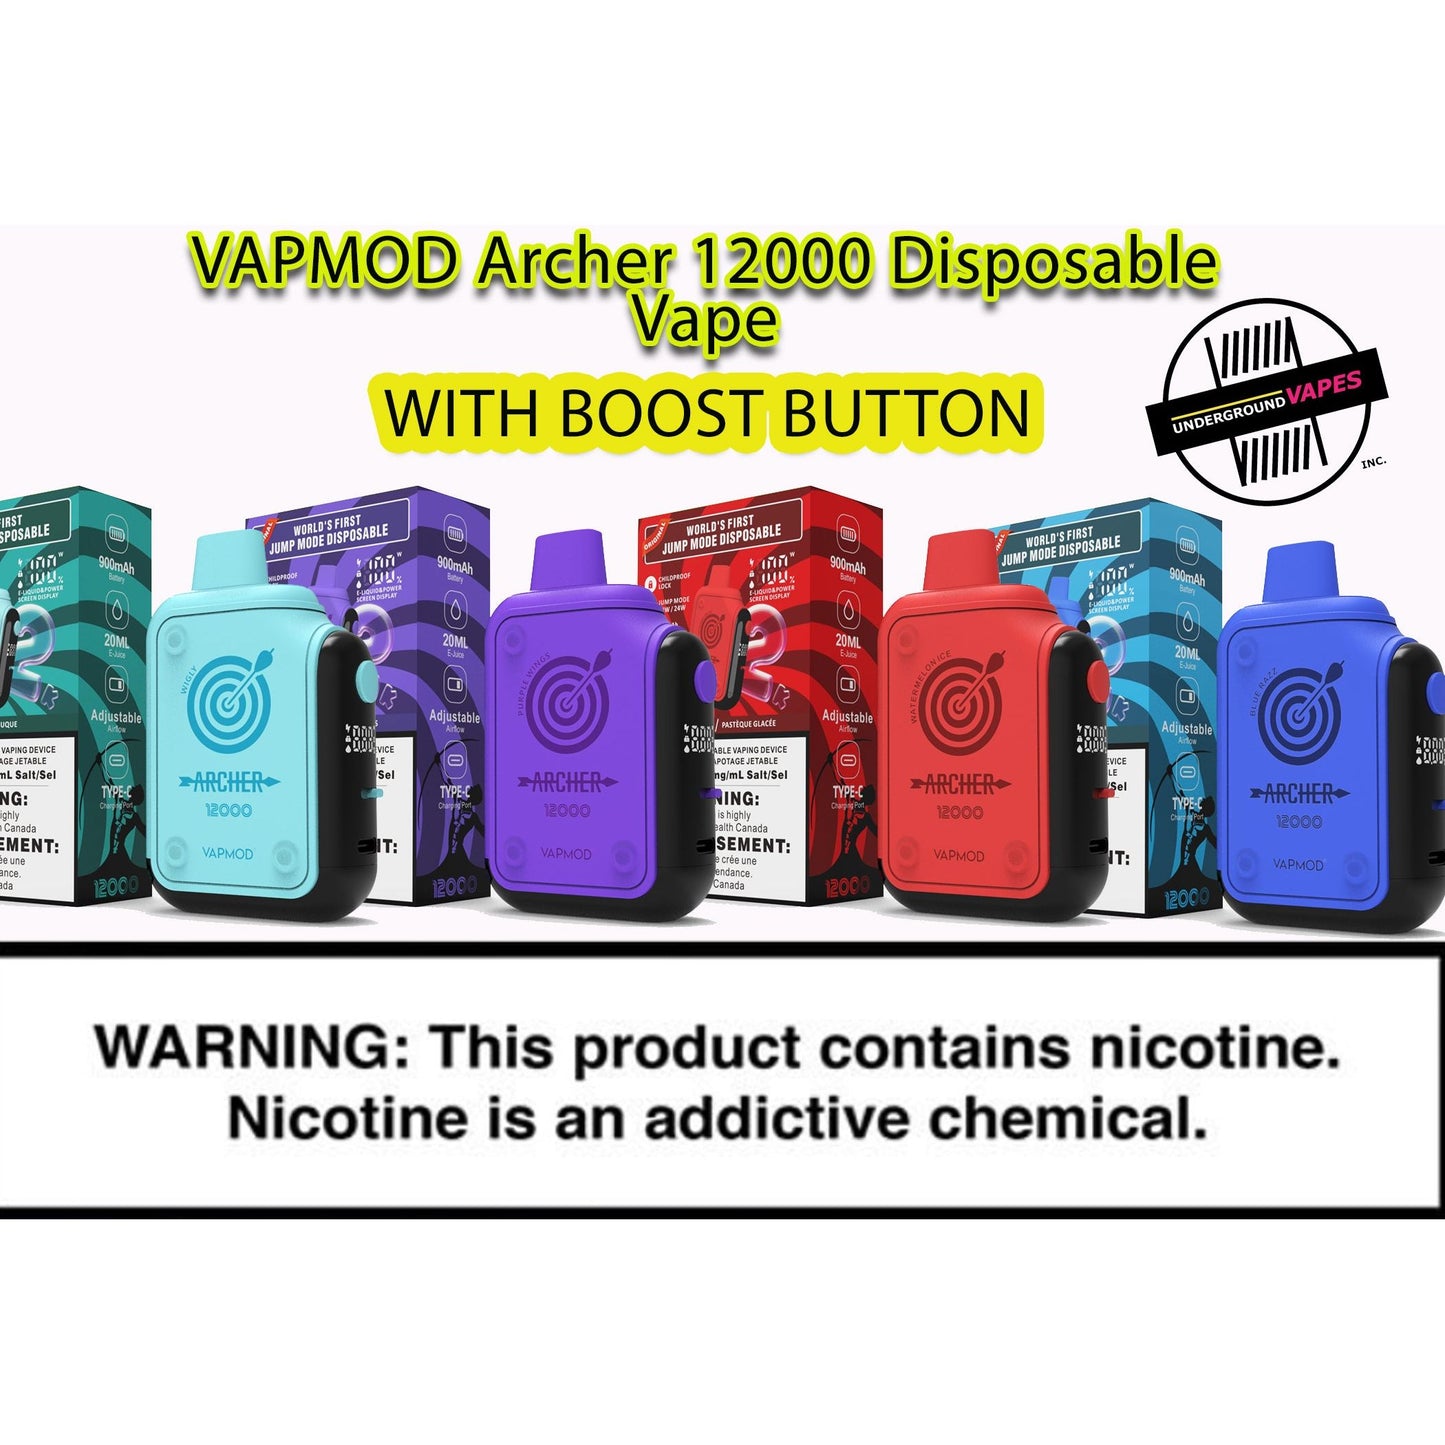 VAPMOD Archer 12000 Disposable Vape